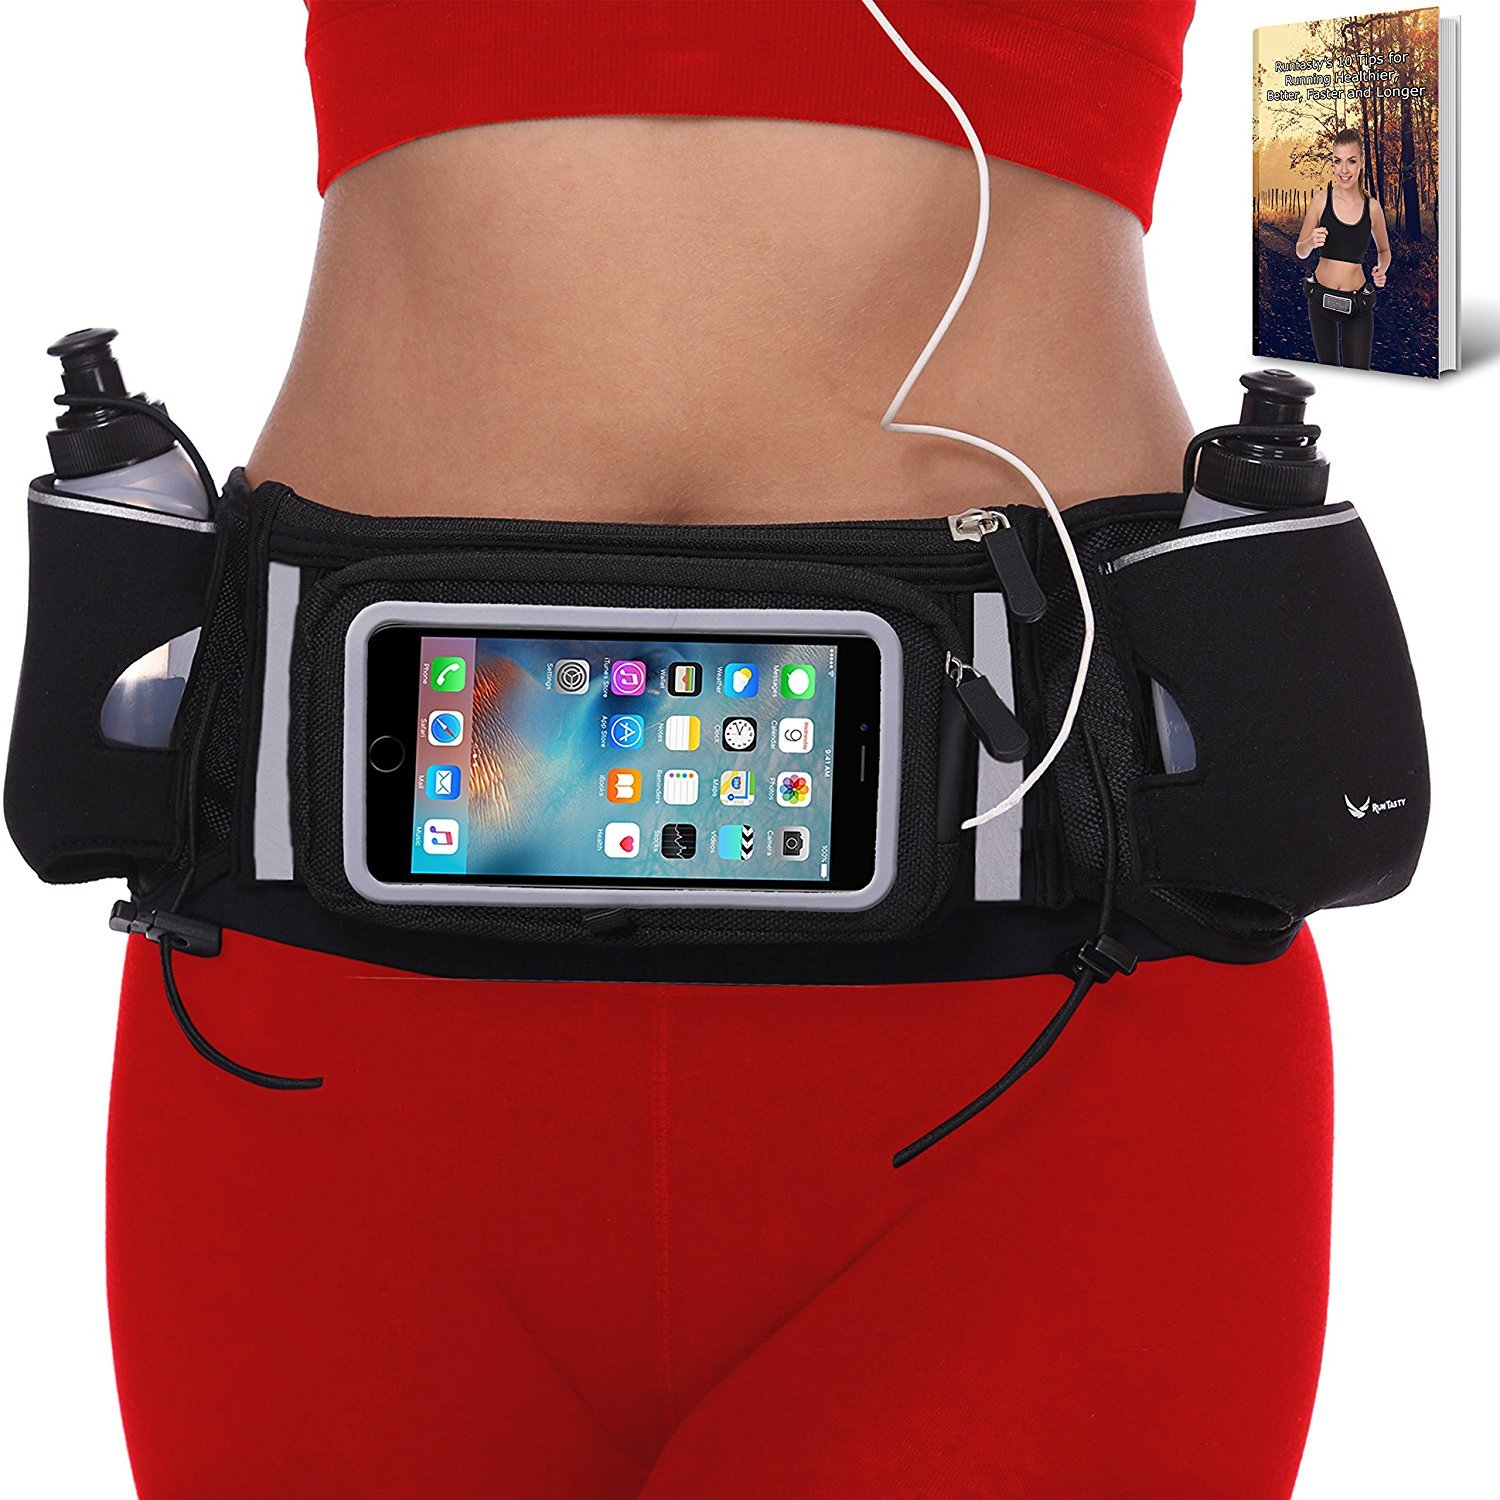 EazyMate Running Belt Waistband with Phone Holder for Fitness Exercise Sports Travel Walking 